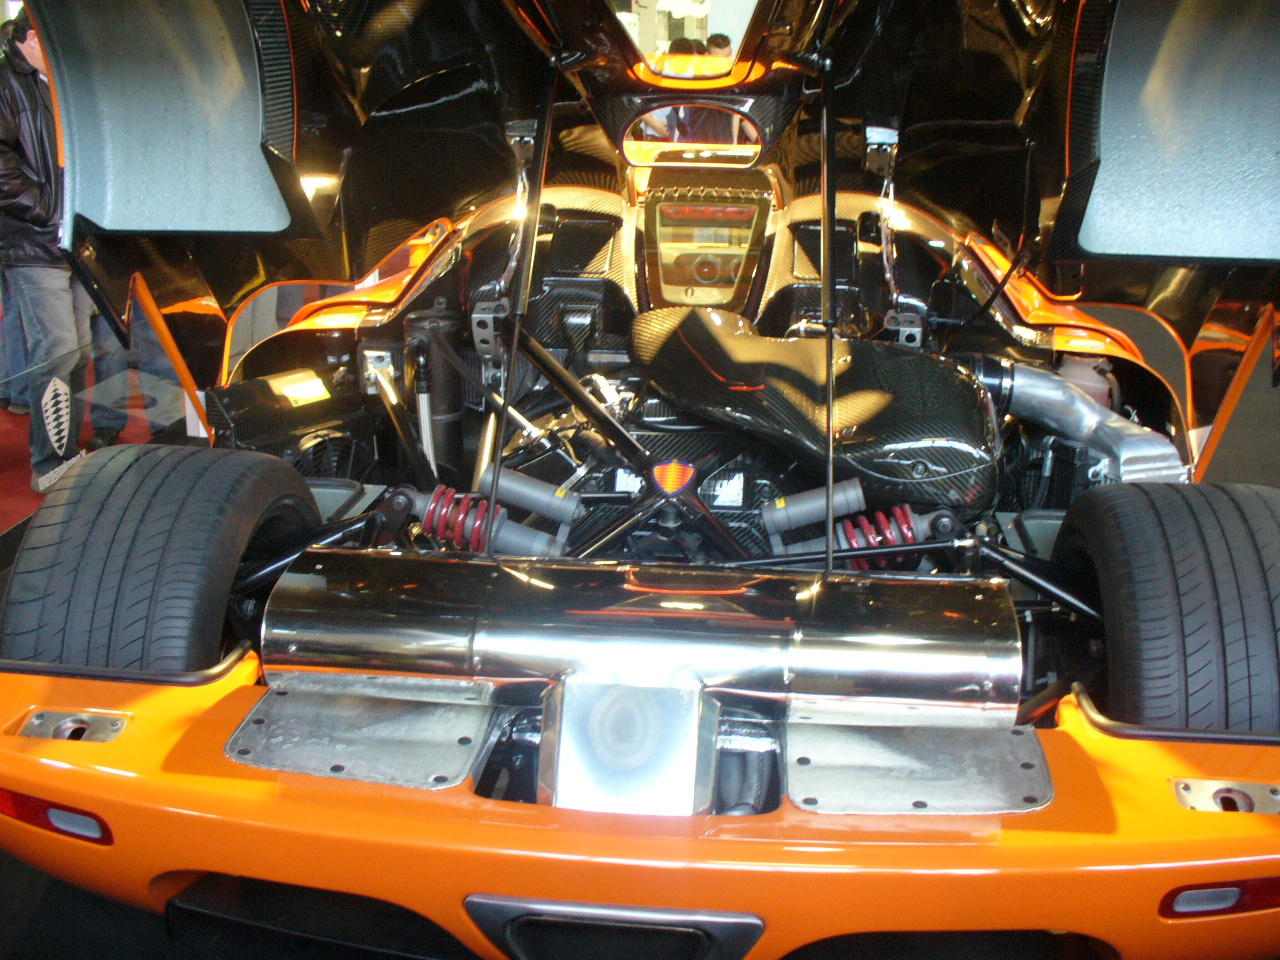 Koenigsegg motor